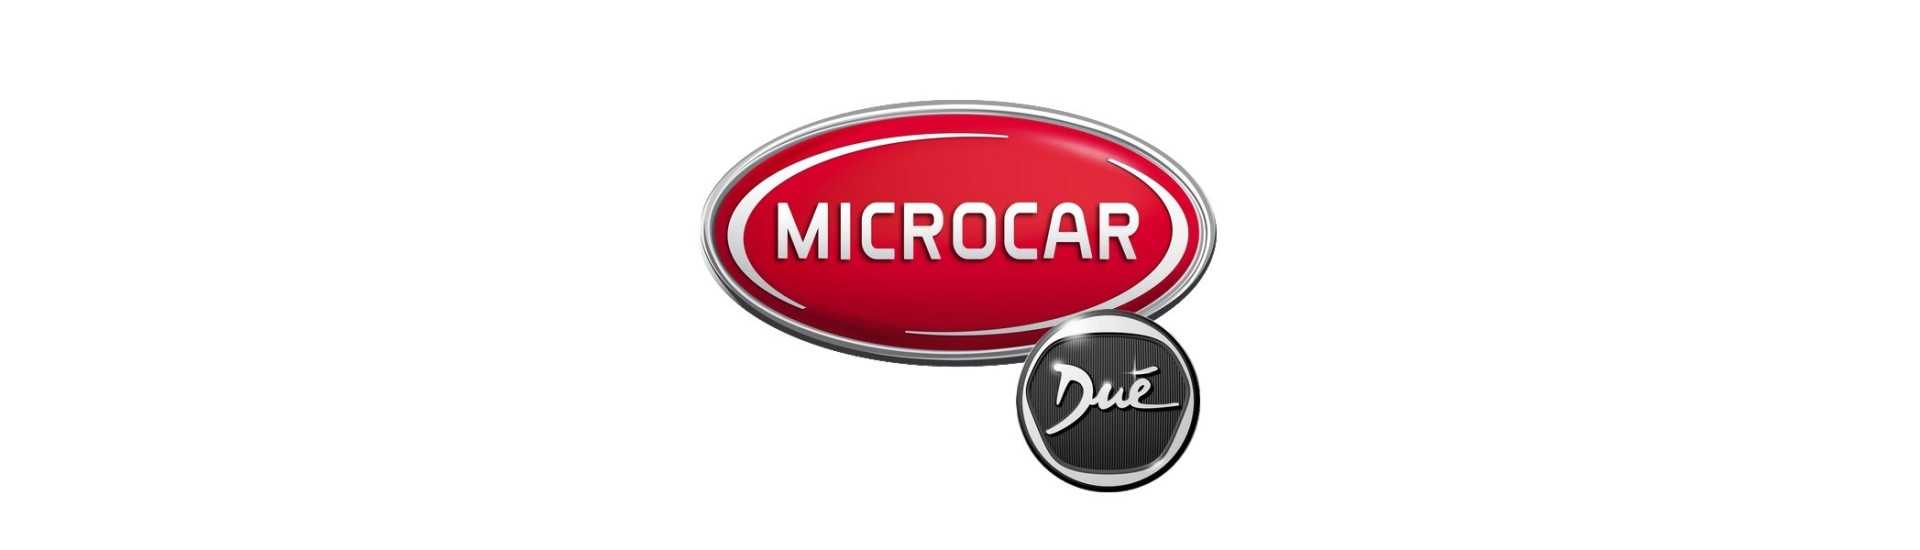 Full Moyeu on asettanut parhaat auton hinnat ilman lupaa Microcar Dué